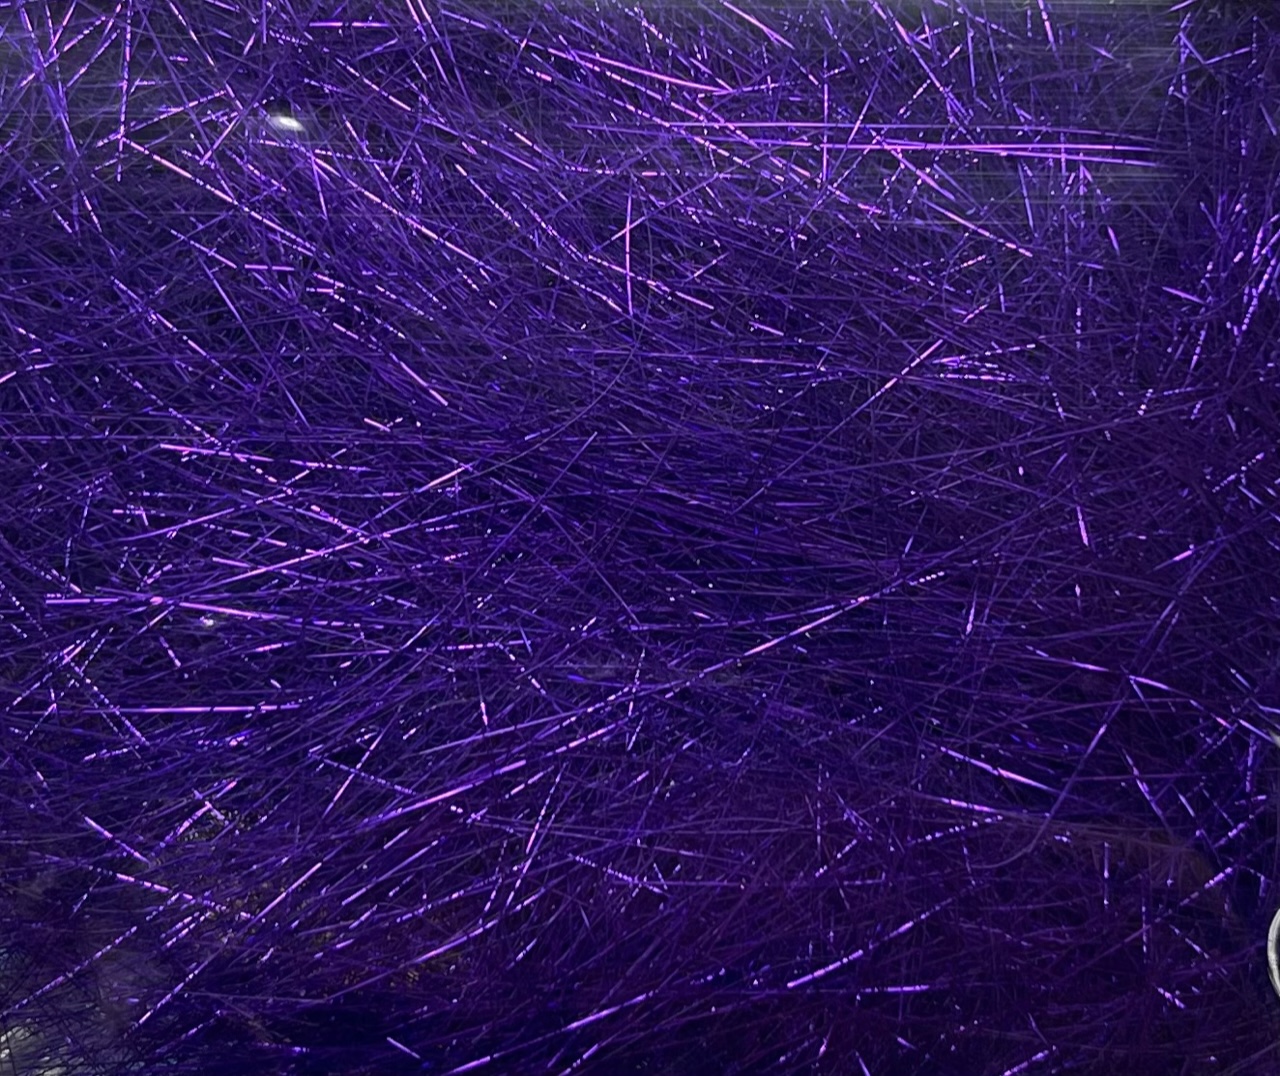 Ice Dub Electric Purple